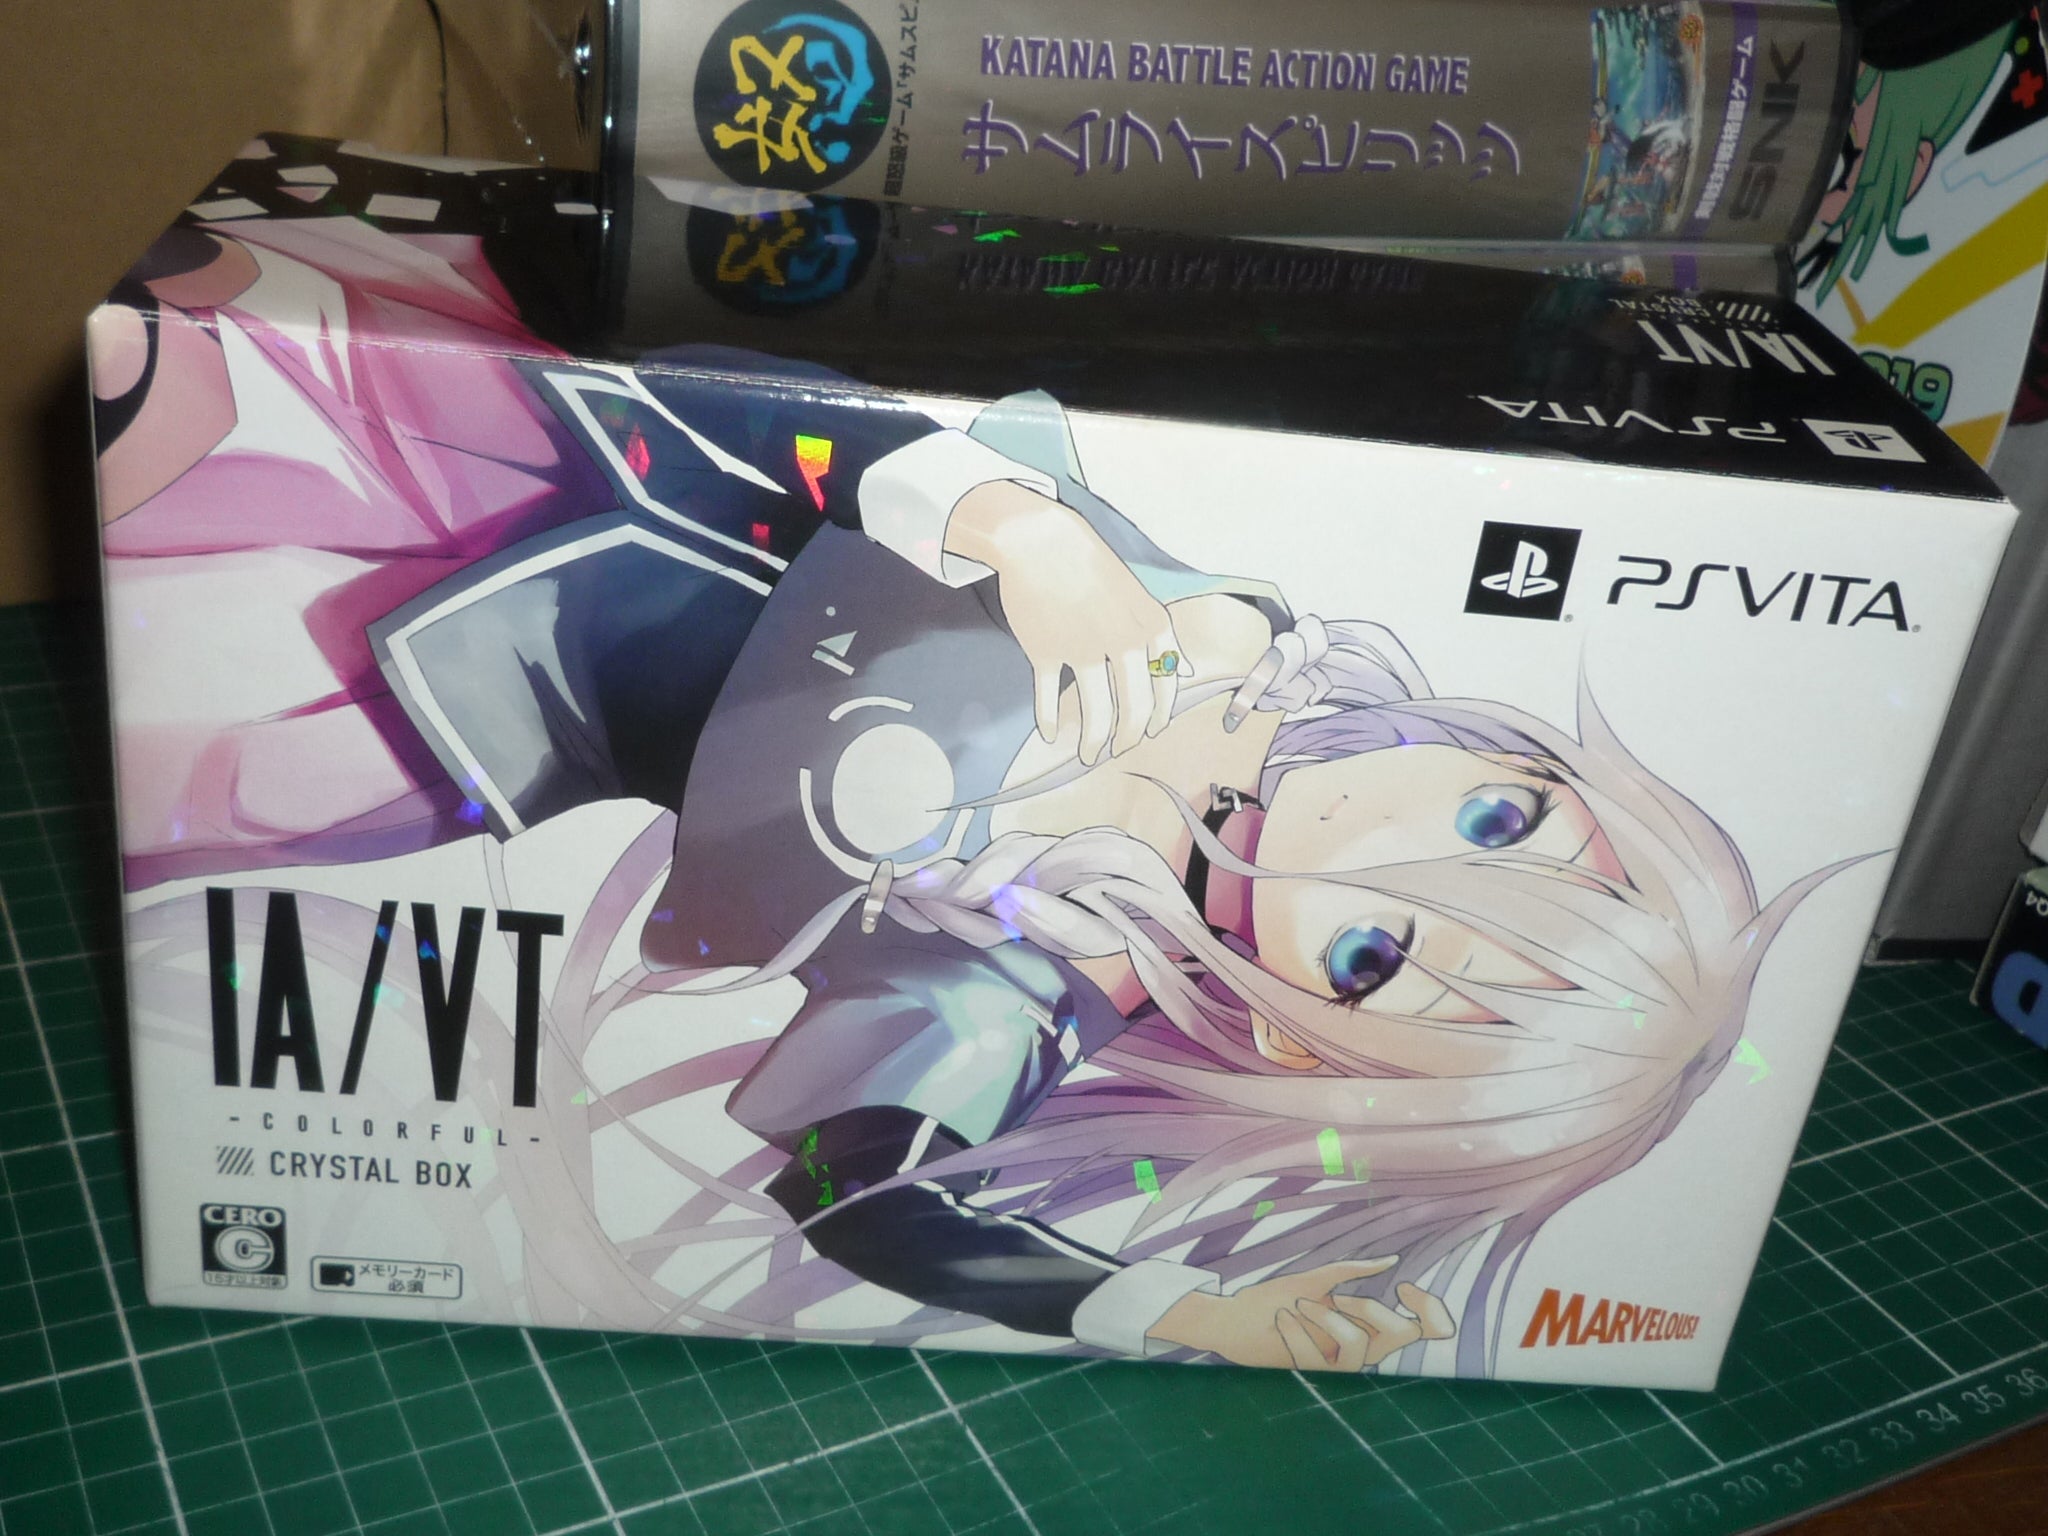 Ia Vt Colorful Crystal Box Japan Import Playstation Vita Ps Vita The Emporium Retrogames And Toys